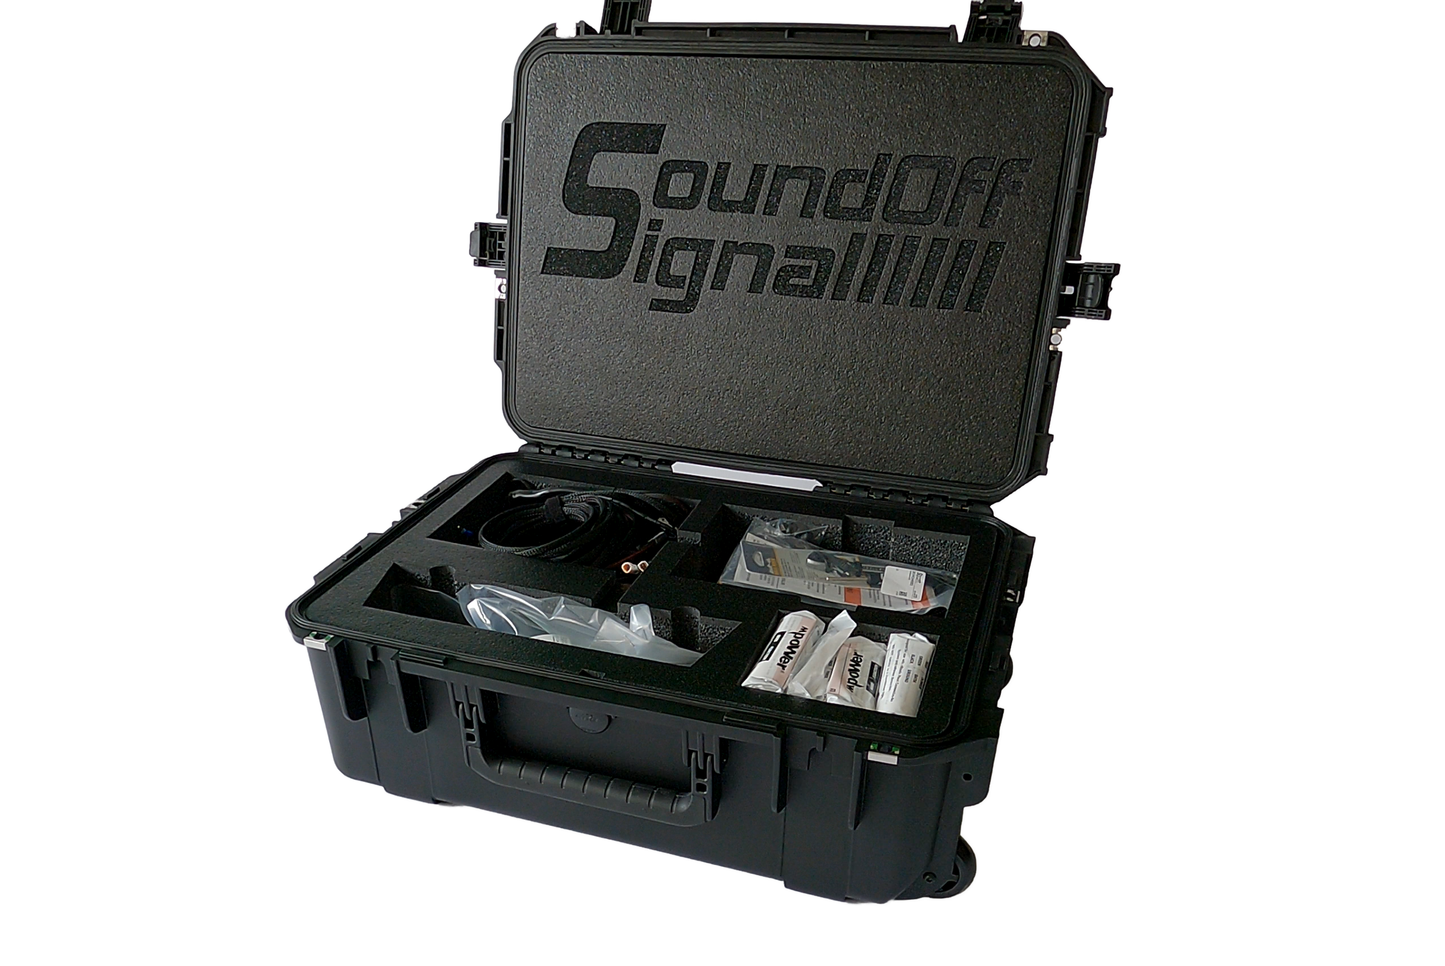 Soundoff Signal ETRDVK003 Rapid Deployment Vehicle Warning Kit